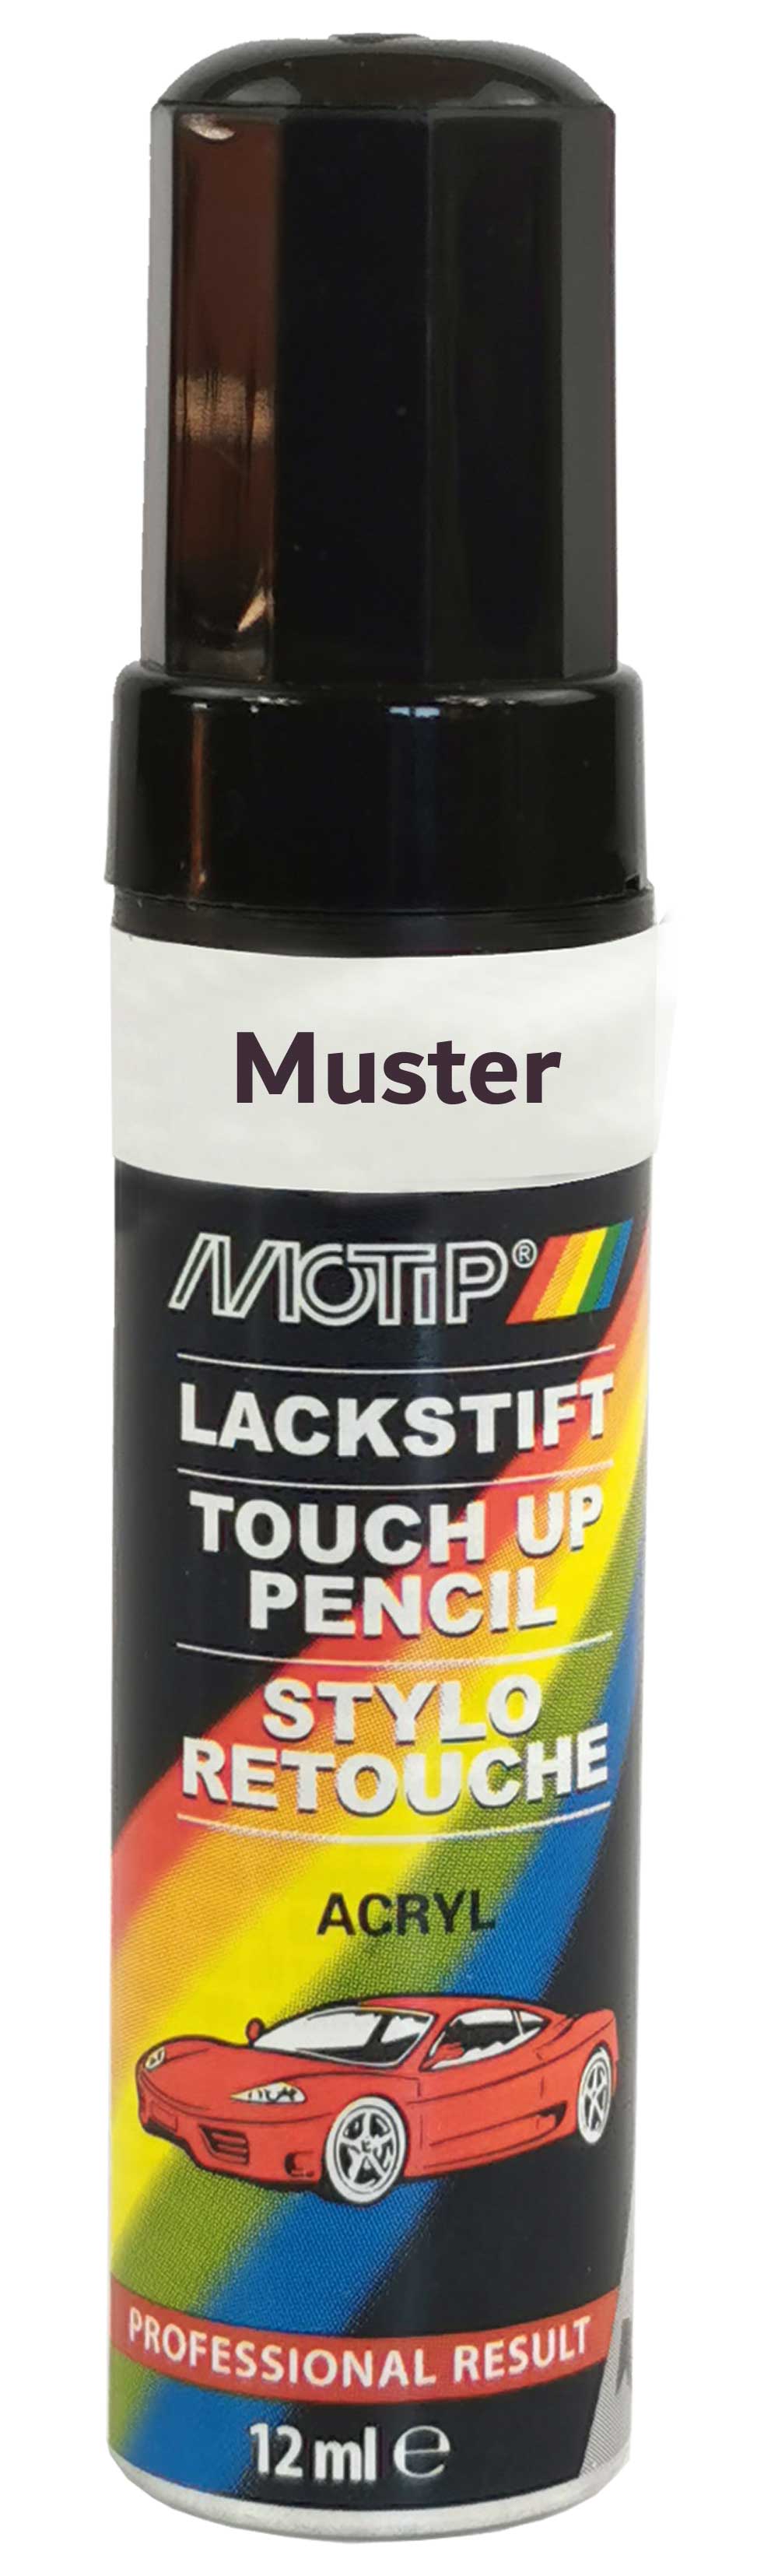 Motip Lack-Stift Felgensilber 12ml 900104